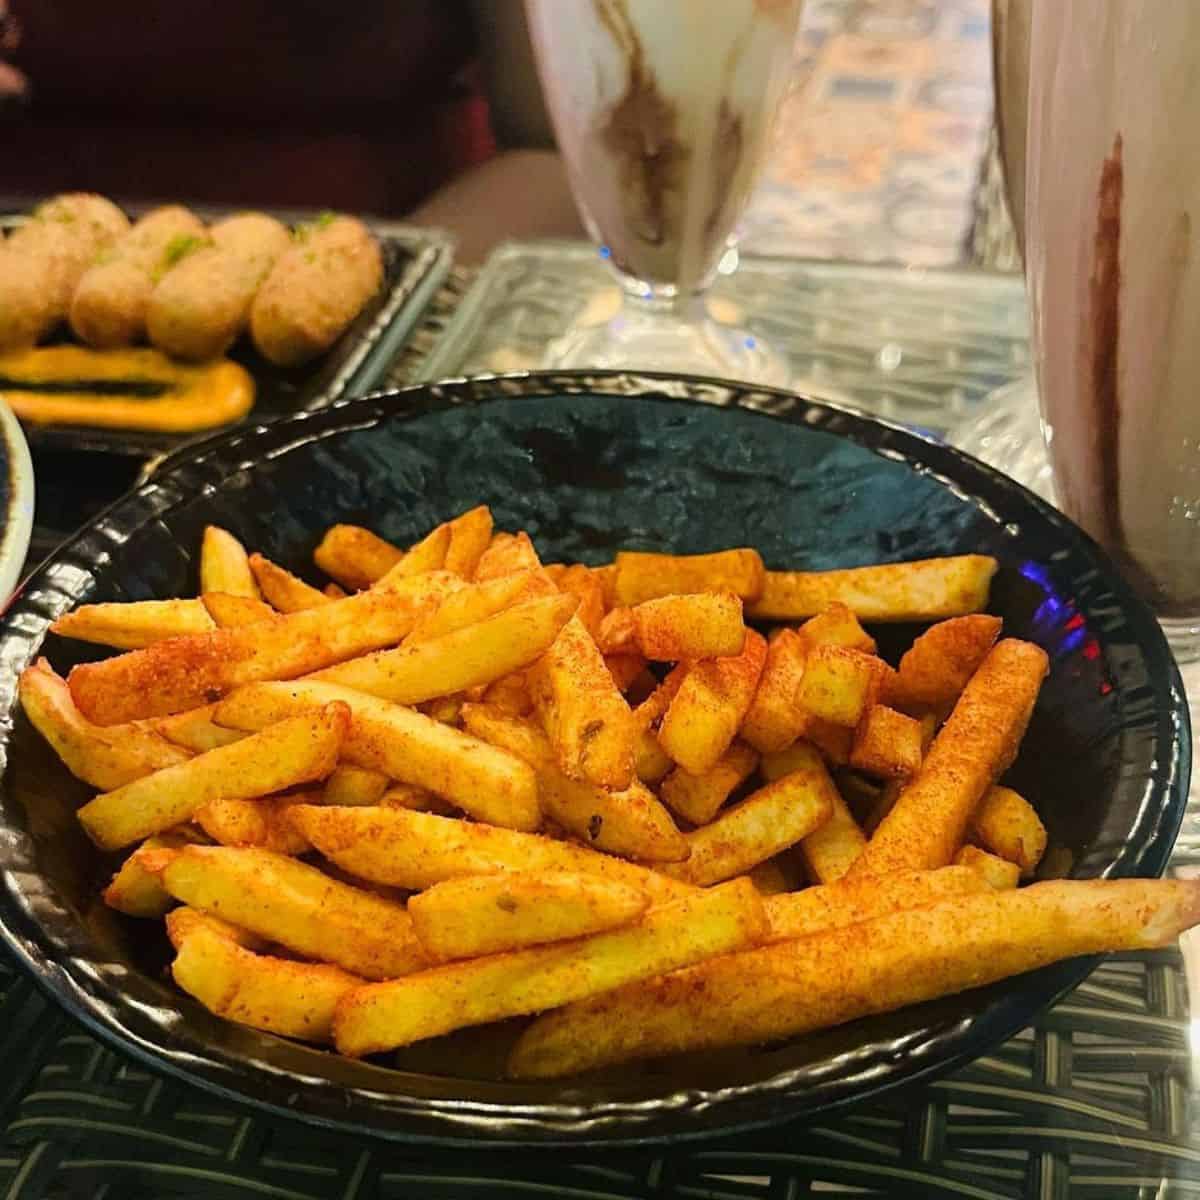 Crunchy potato fries sprinkled with peri peri seasoning